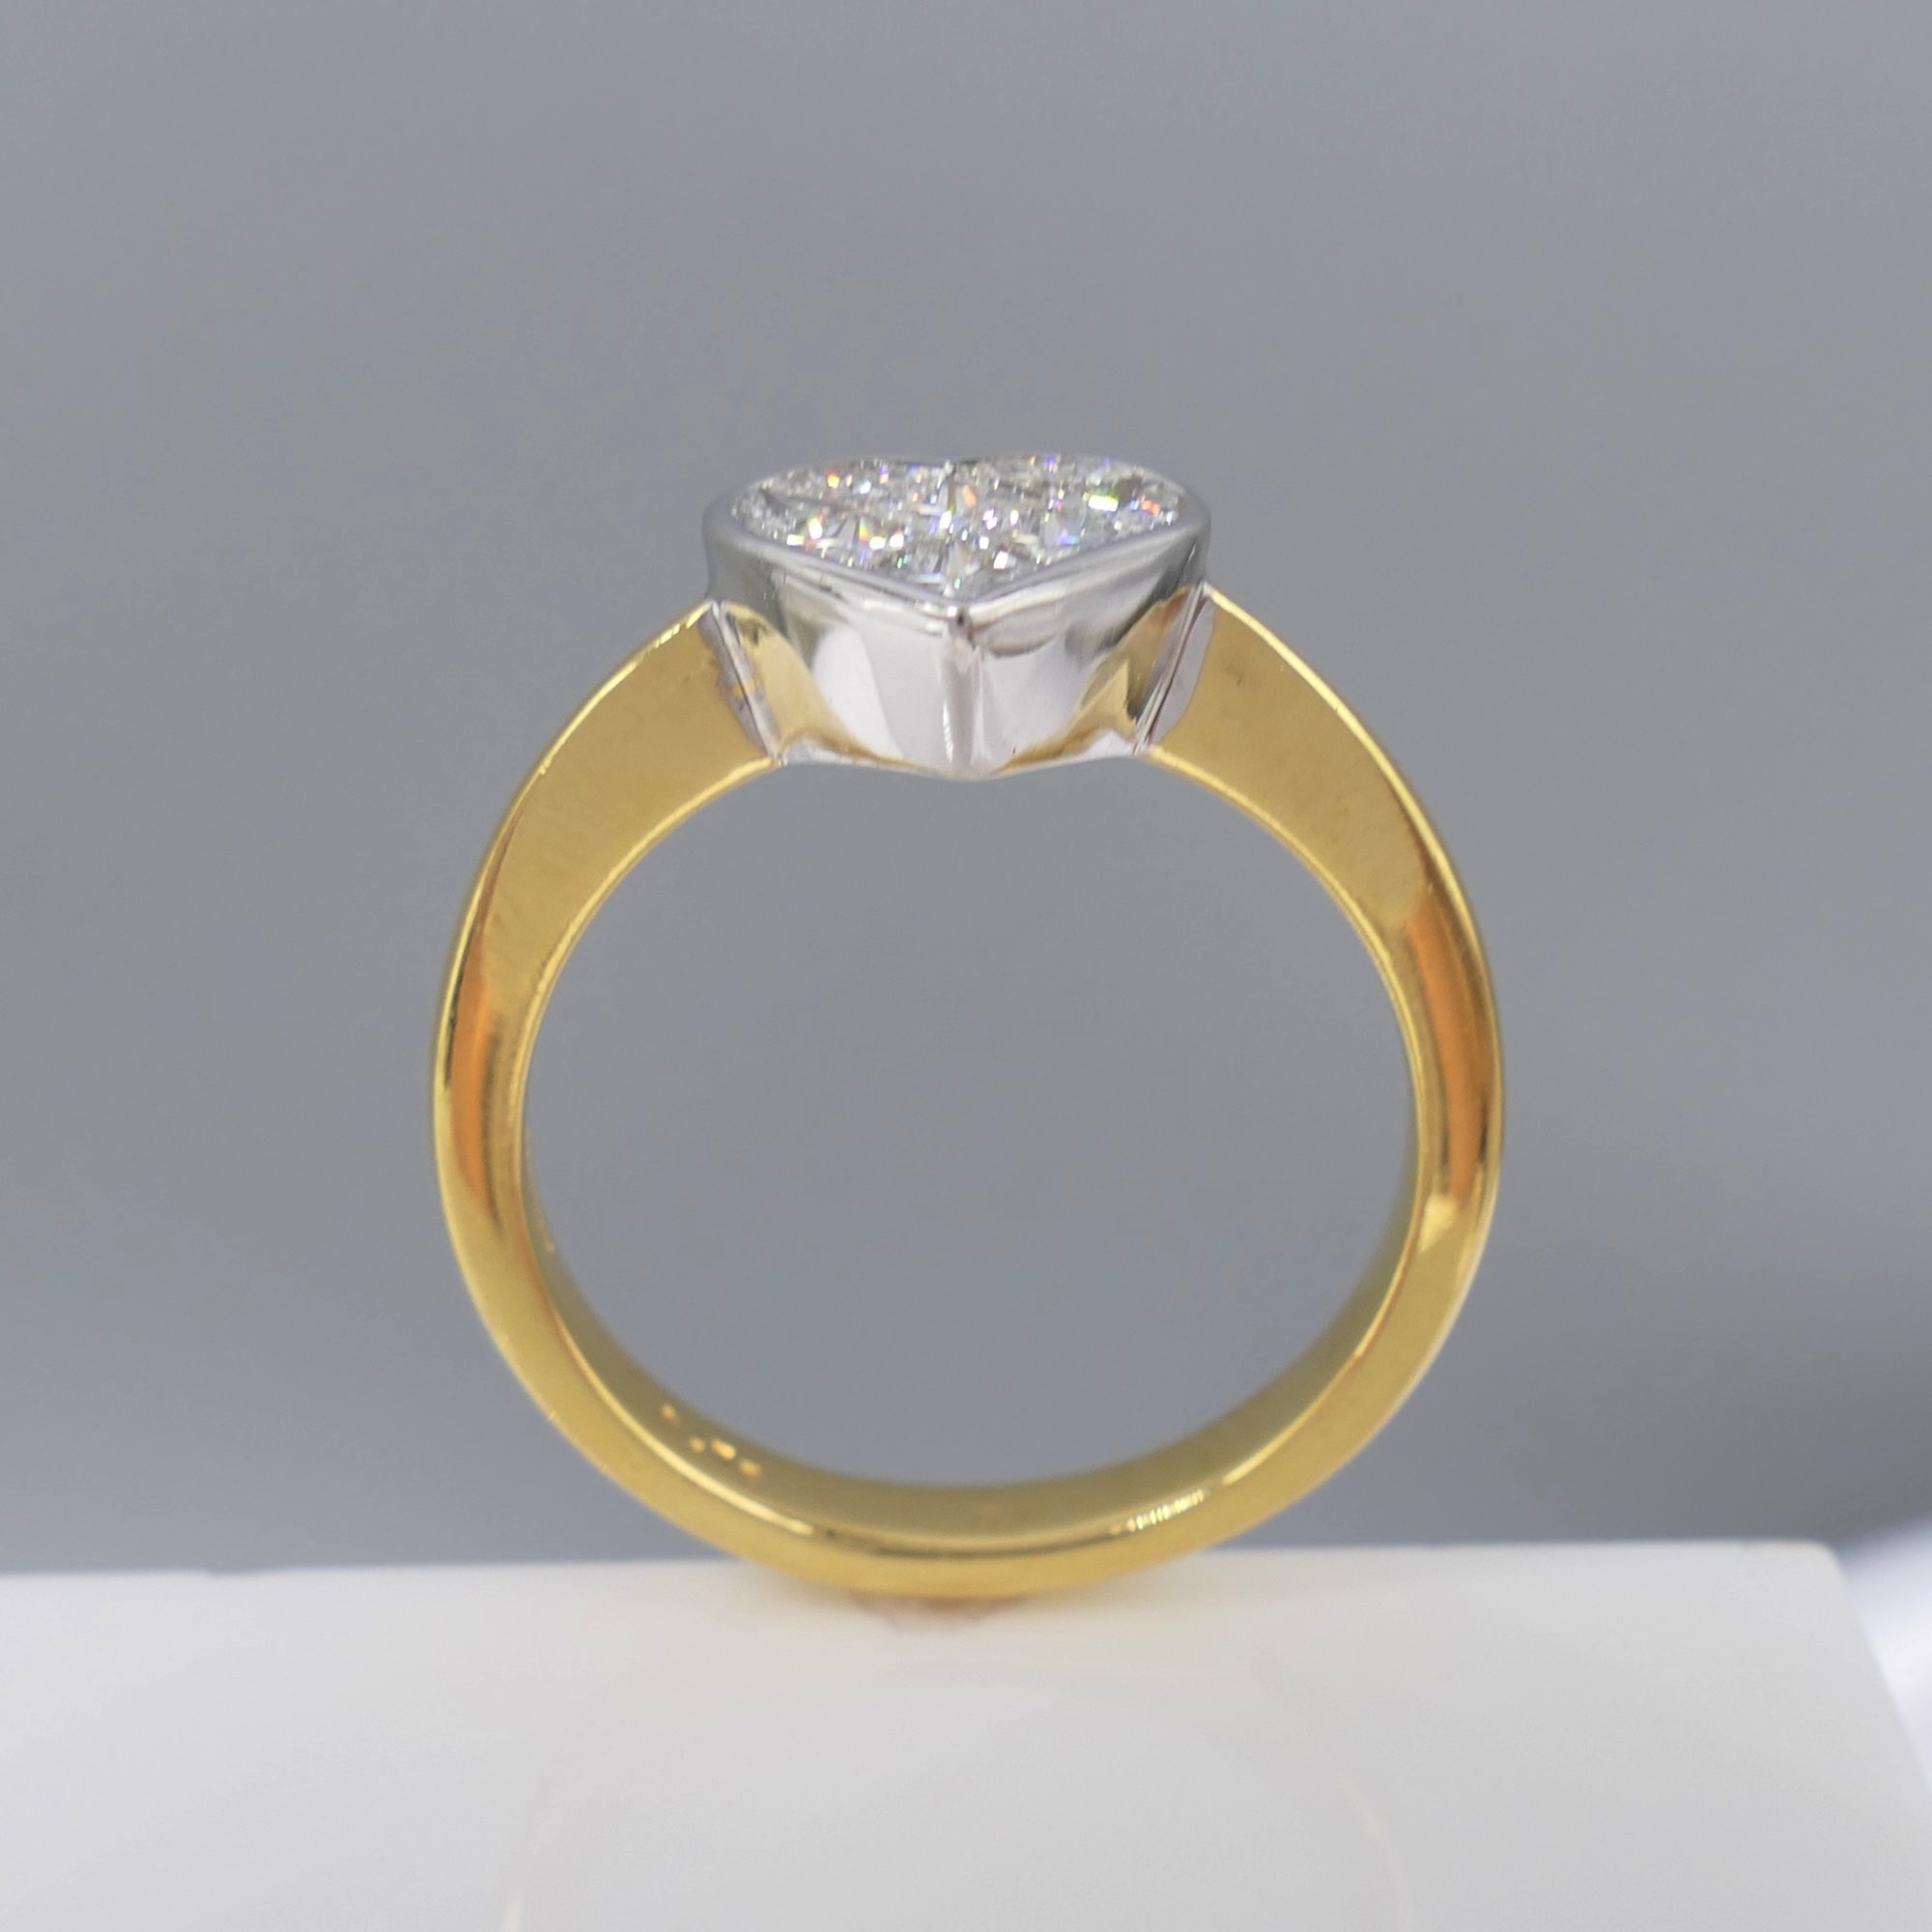 18ct Yellow Gold 0.75 Carat Heart-Shaped Princess-Cut Diamond Ring - Image 6 of 7